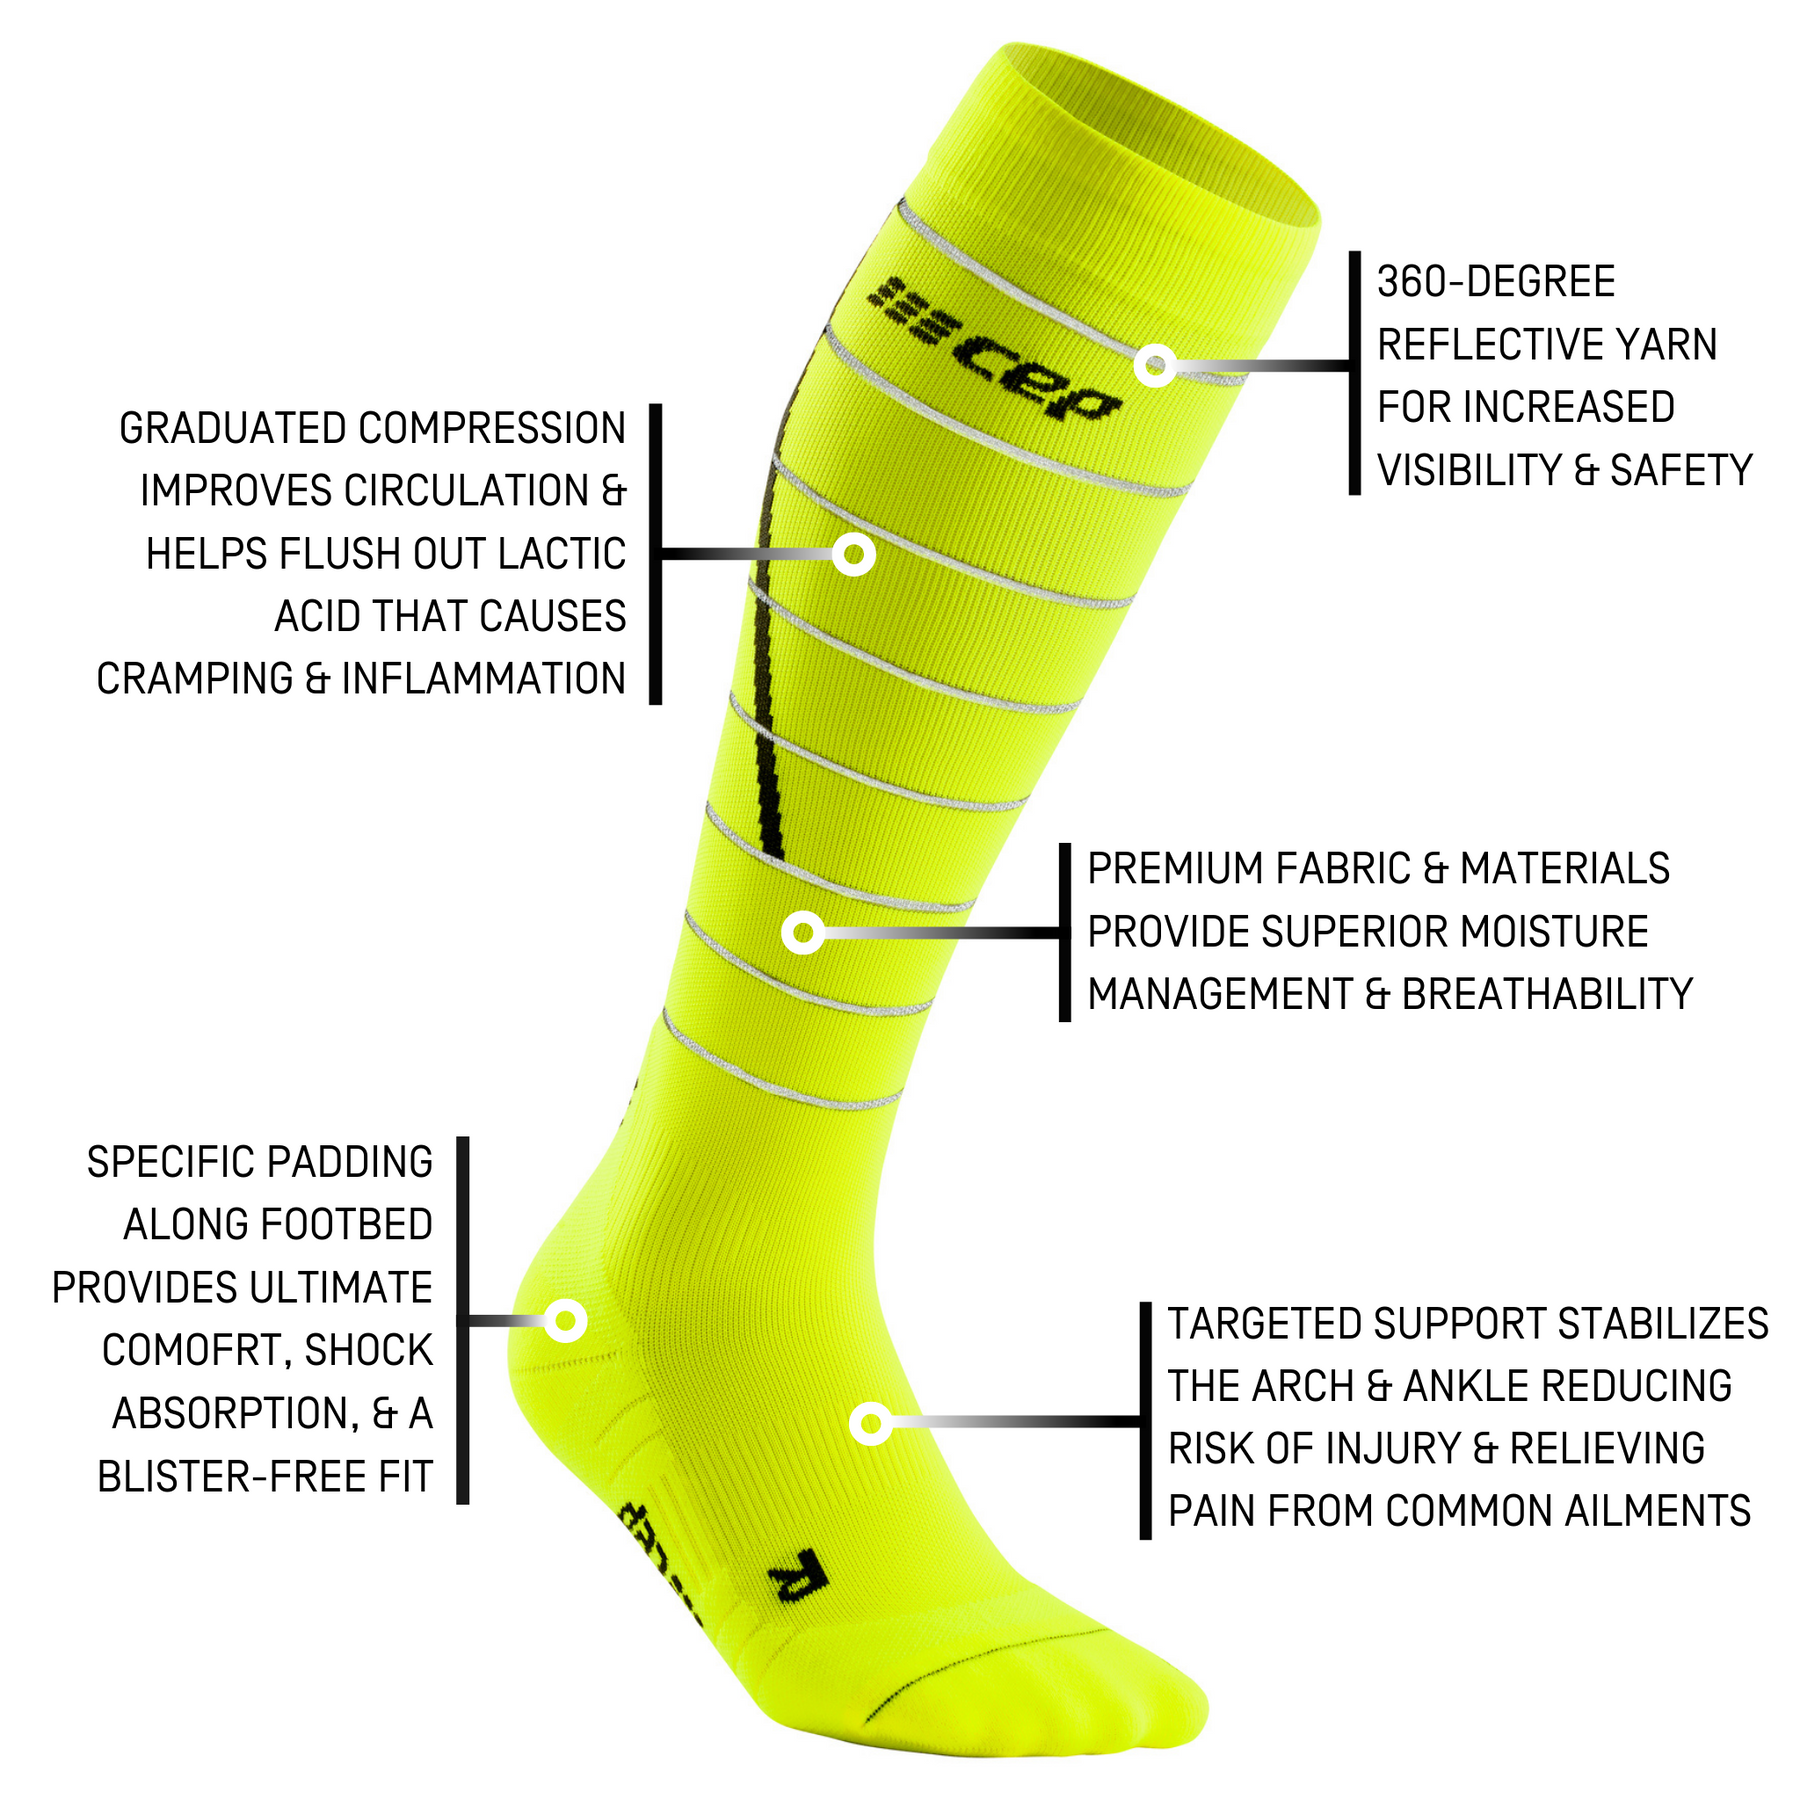 Women's mid-calf compression socks CEP Compression Reflective - Socks -  Women's wear - Rallystory wear